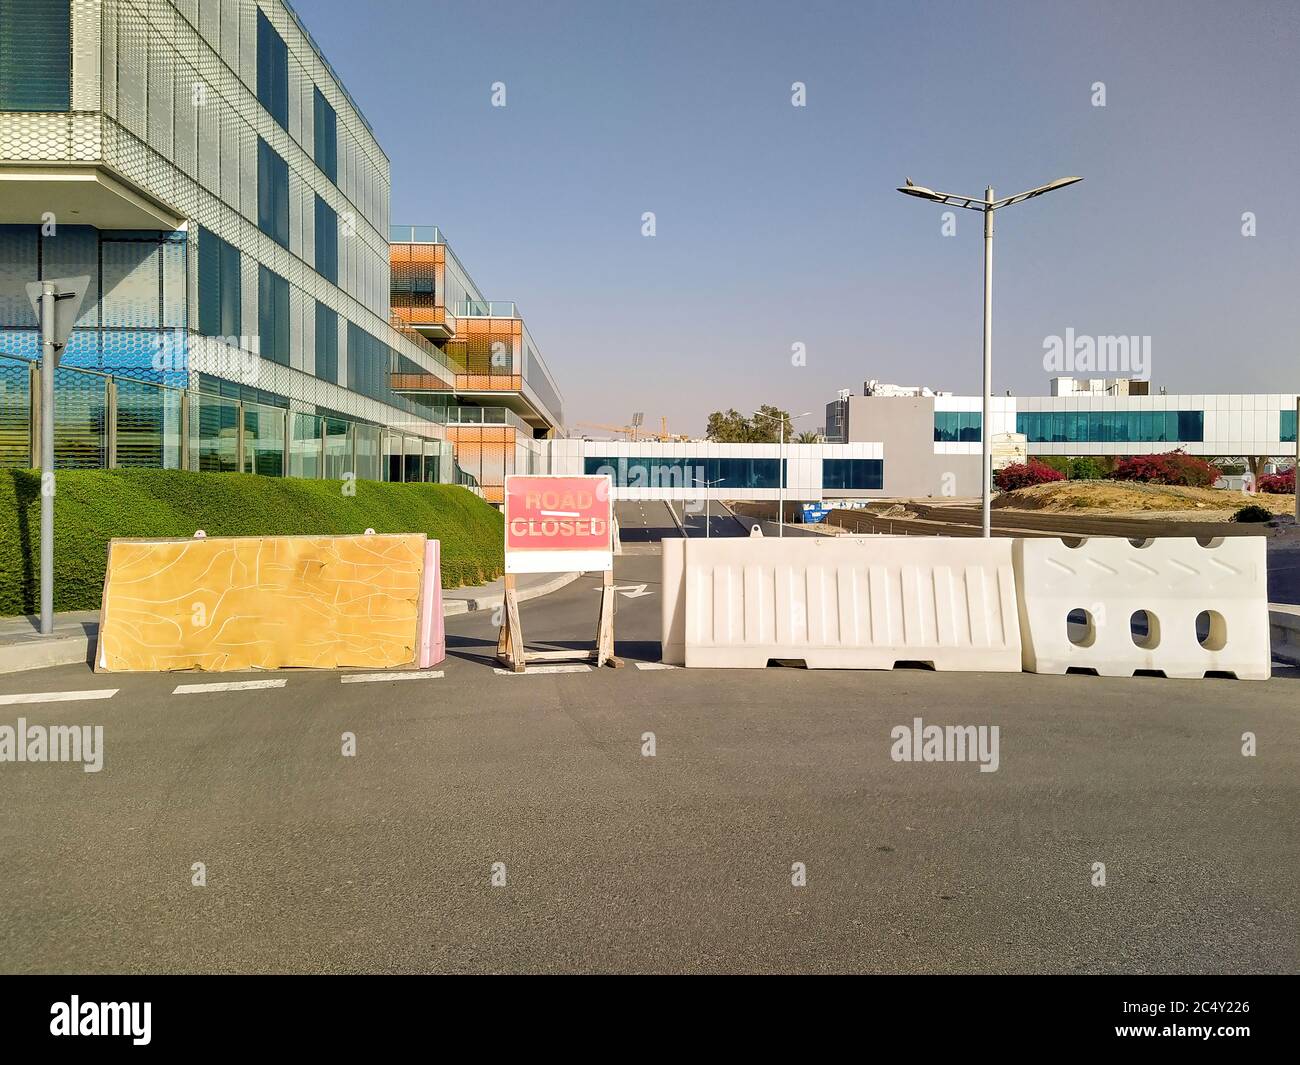 Dubai, UAE - CIRCA 2020: Road closer sign and road blockade near a hospital. Concept of road diversion. Stock Photo